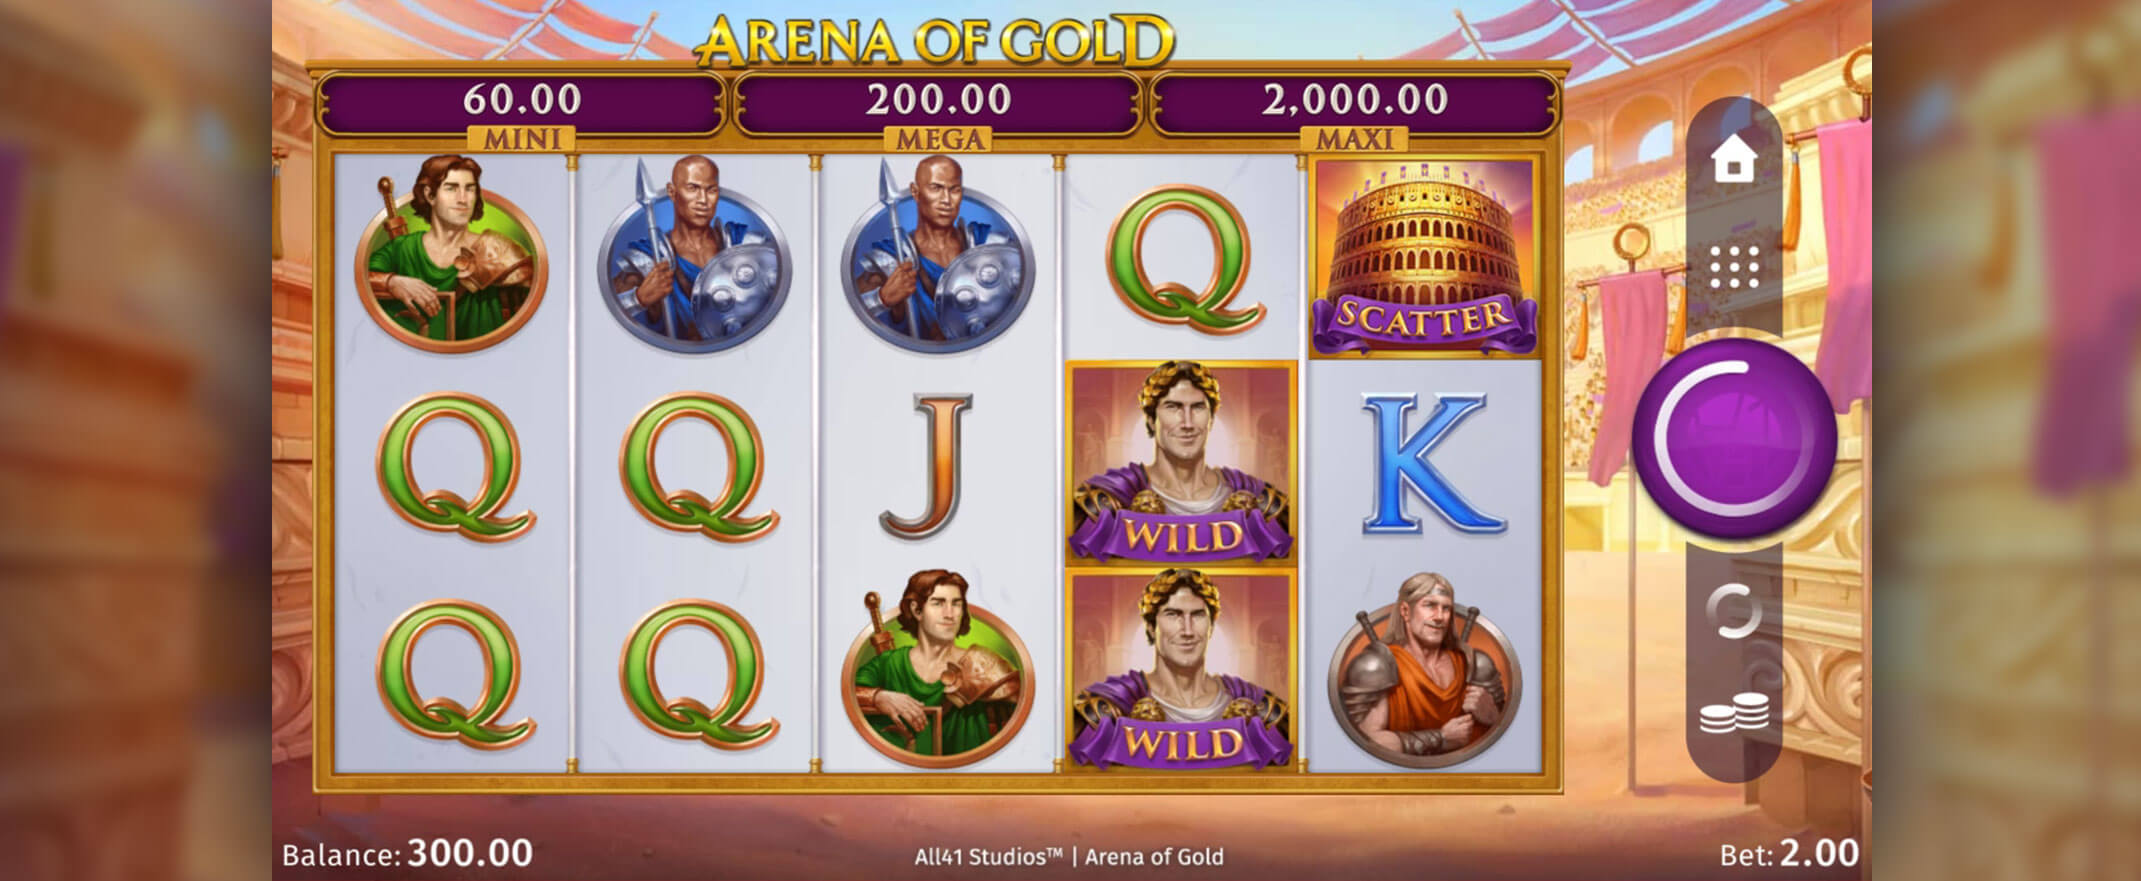 Arena of Gold Slot Screenshot